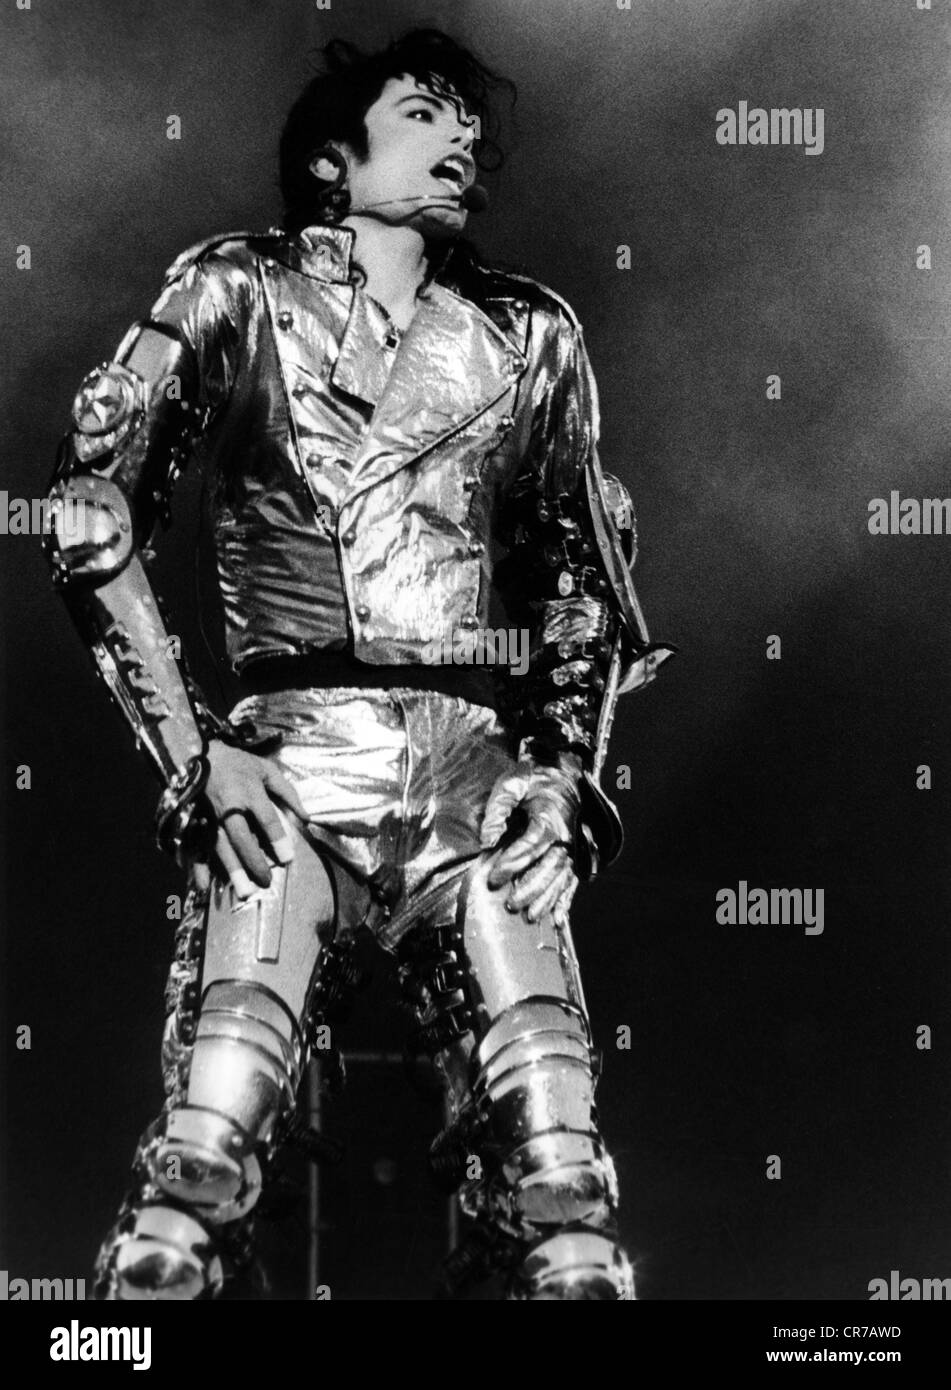 Jackson, Michael, 29.8.1958 - 25.6.2009, American musician (pop singer), half length, during concert gig, HIStory world tour, Hockenheim, Germany, 1997, , Stock Photo